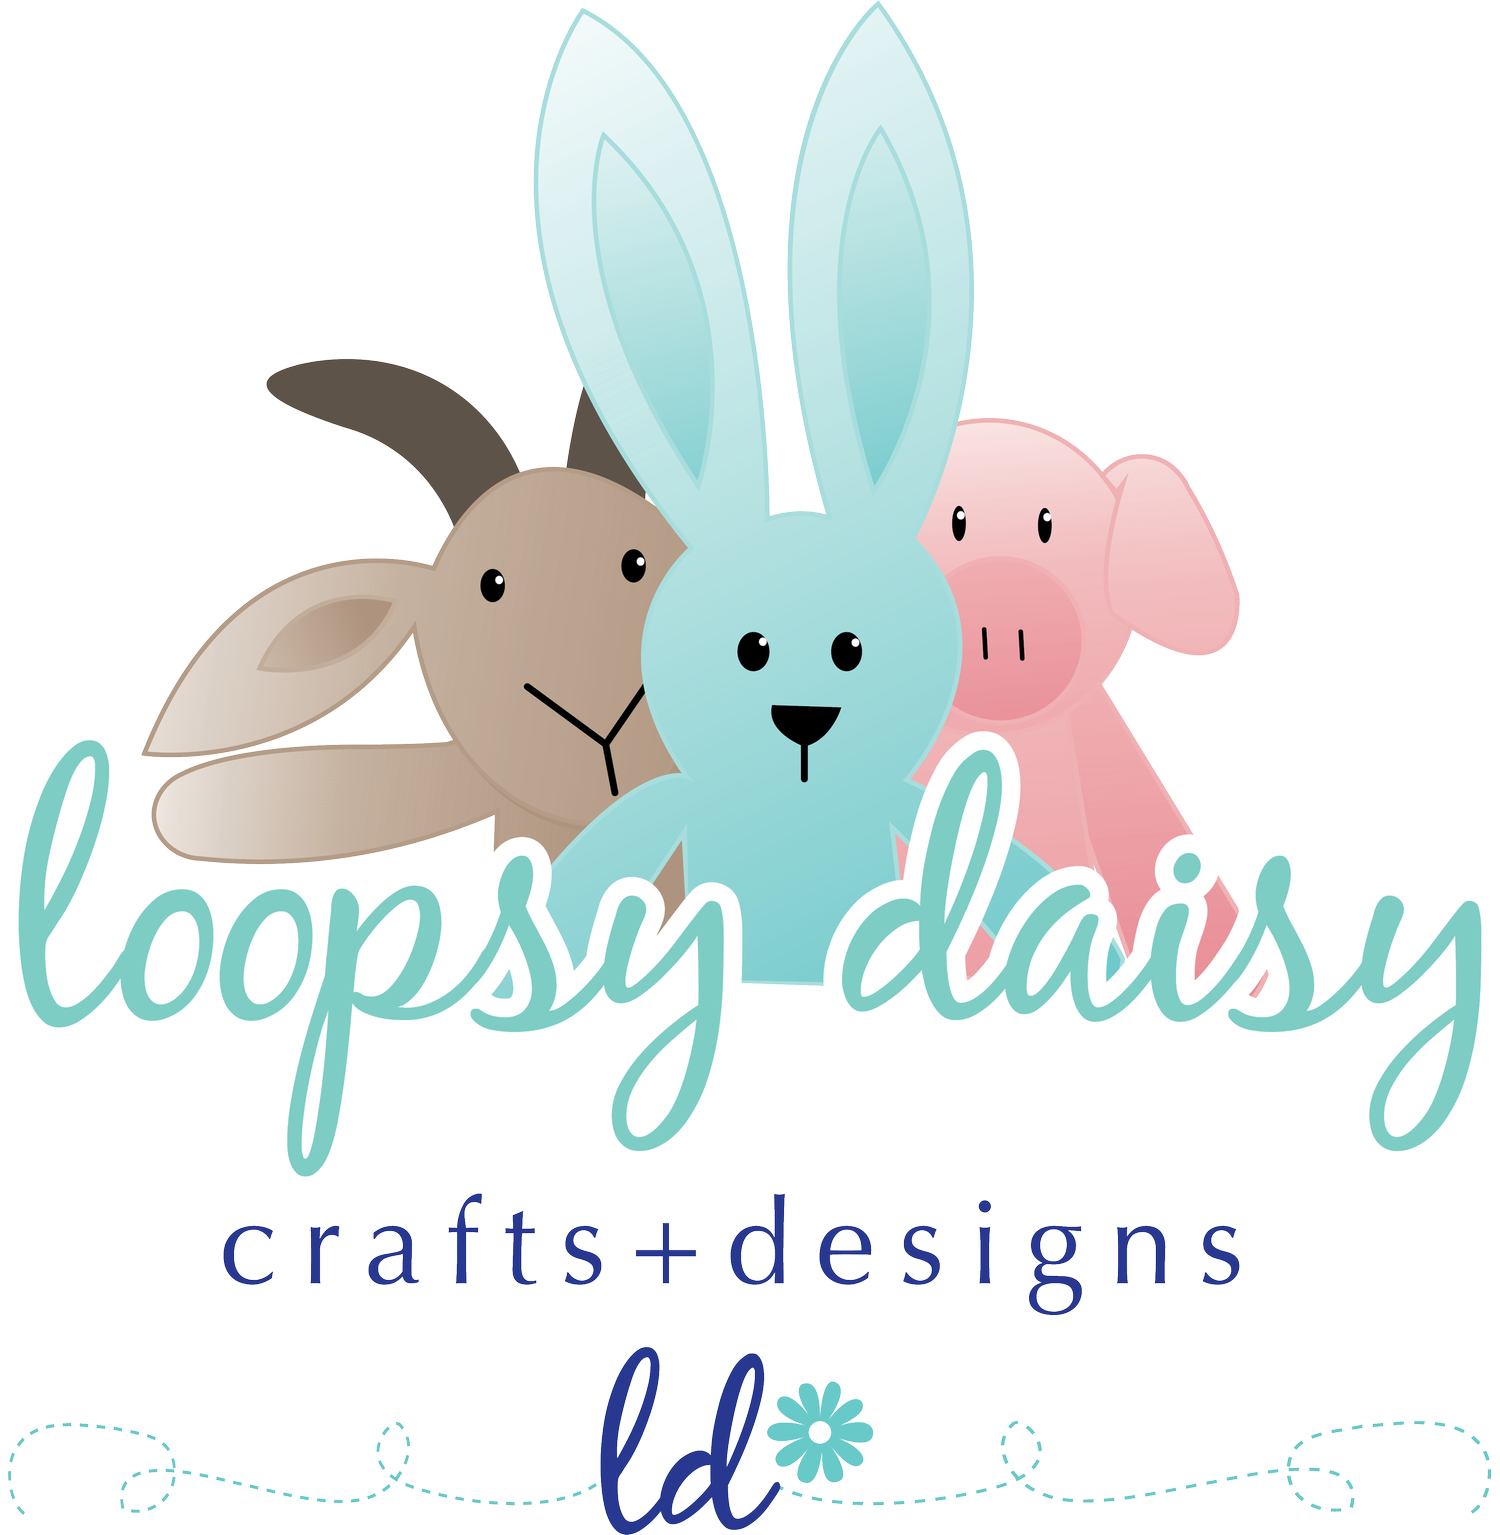 Loopsy Daisy Crafts + Designs